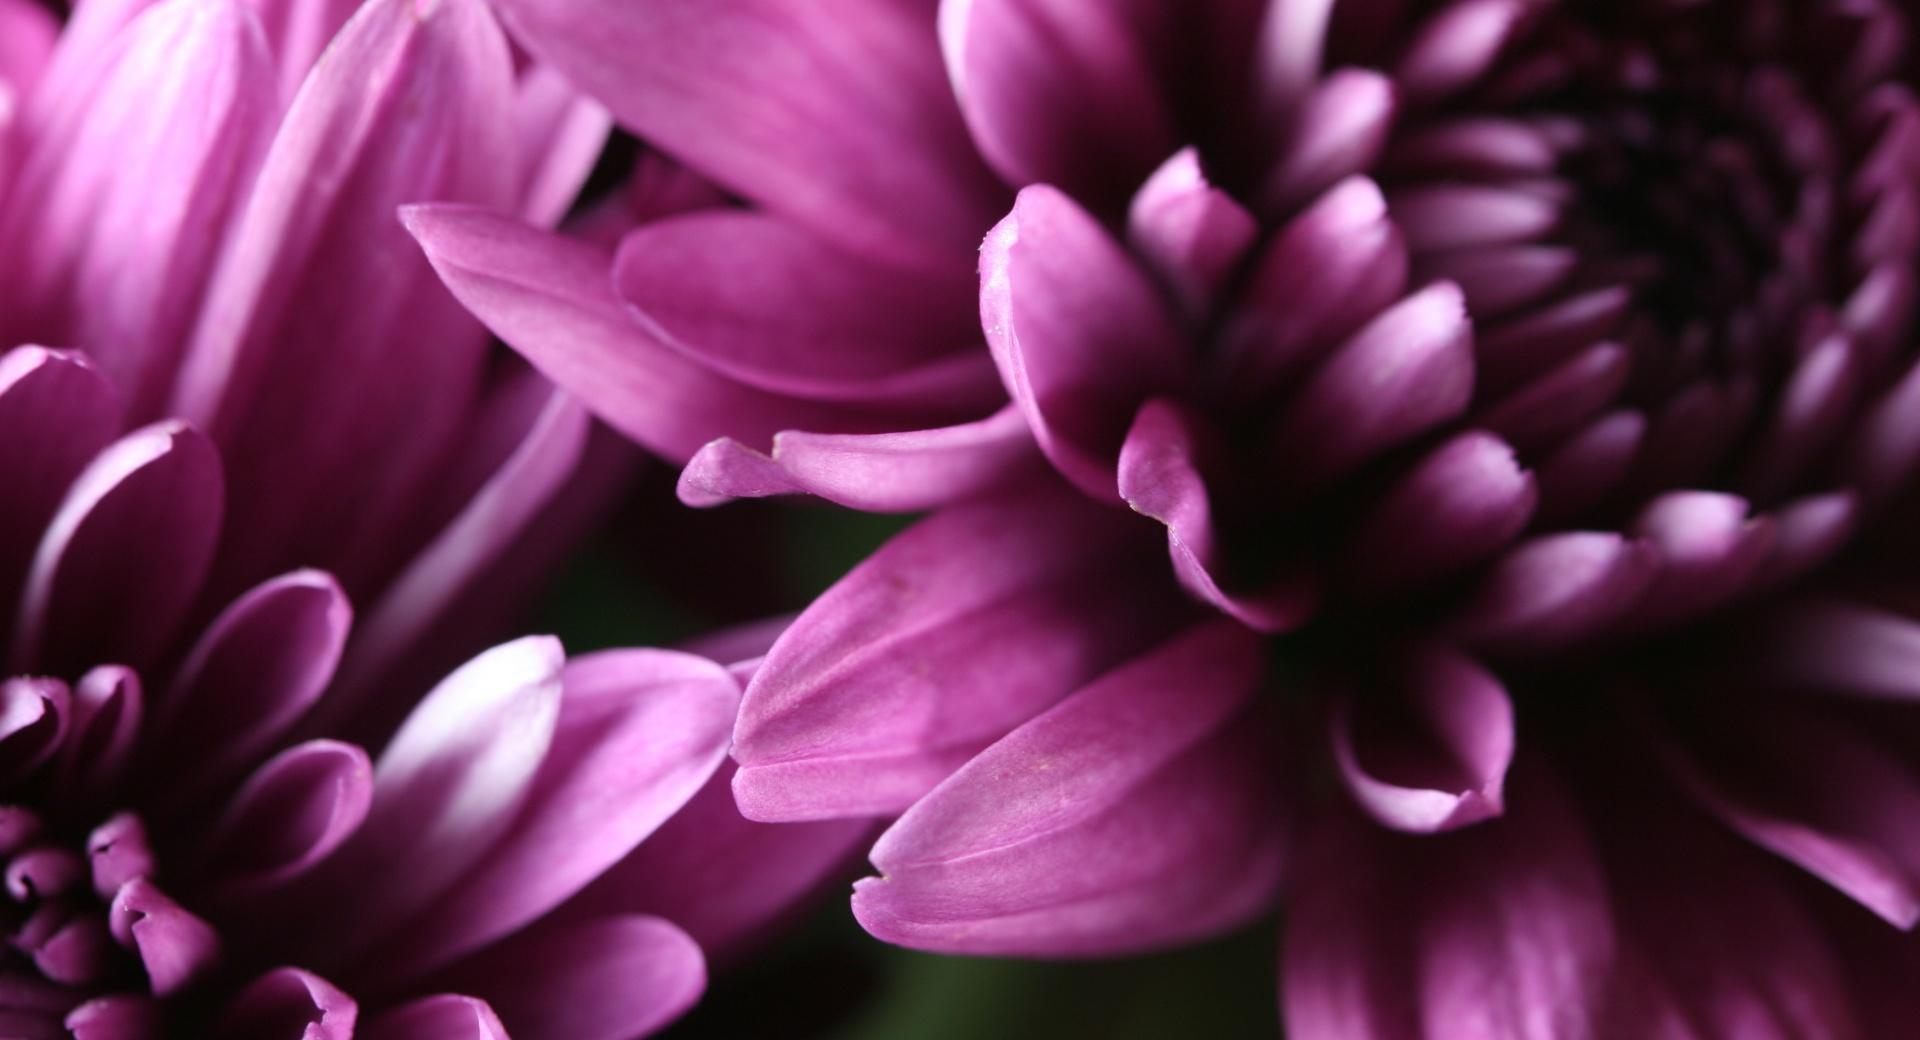 Purple Chrysanthemum at 2048 x 2048 iPad size wallpapers HD quality